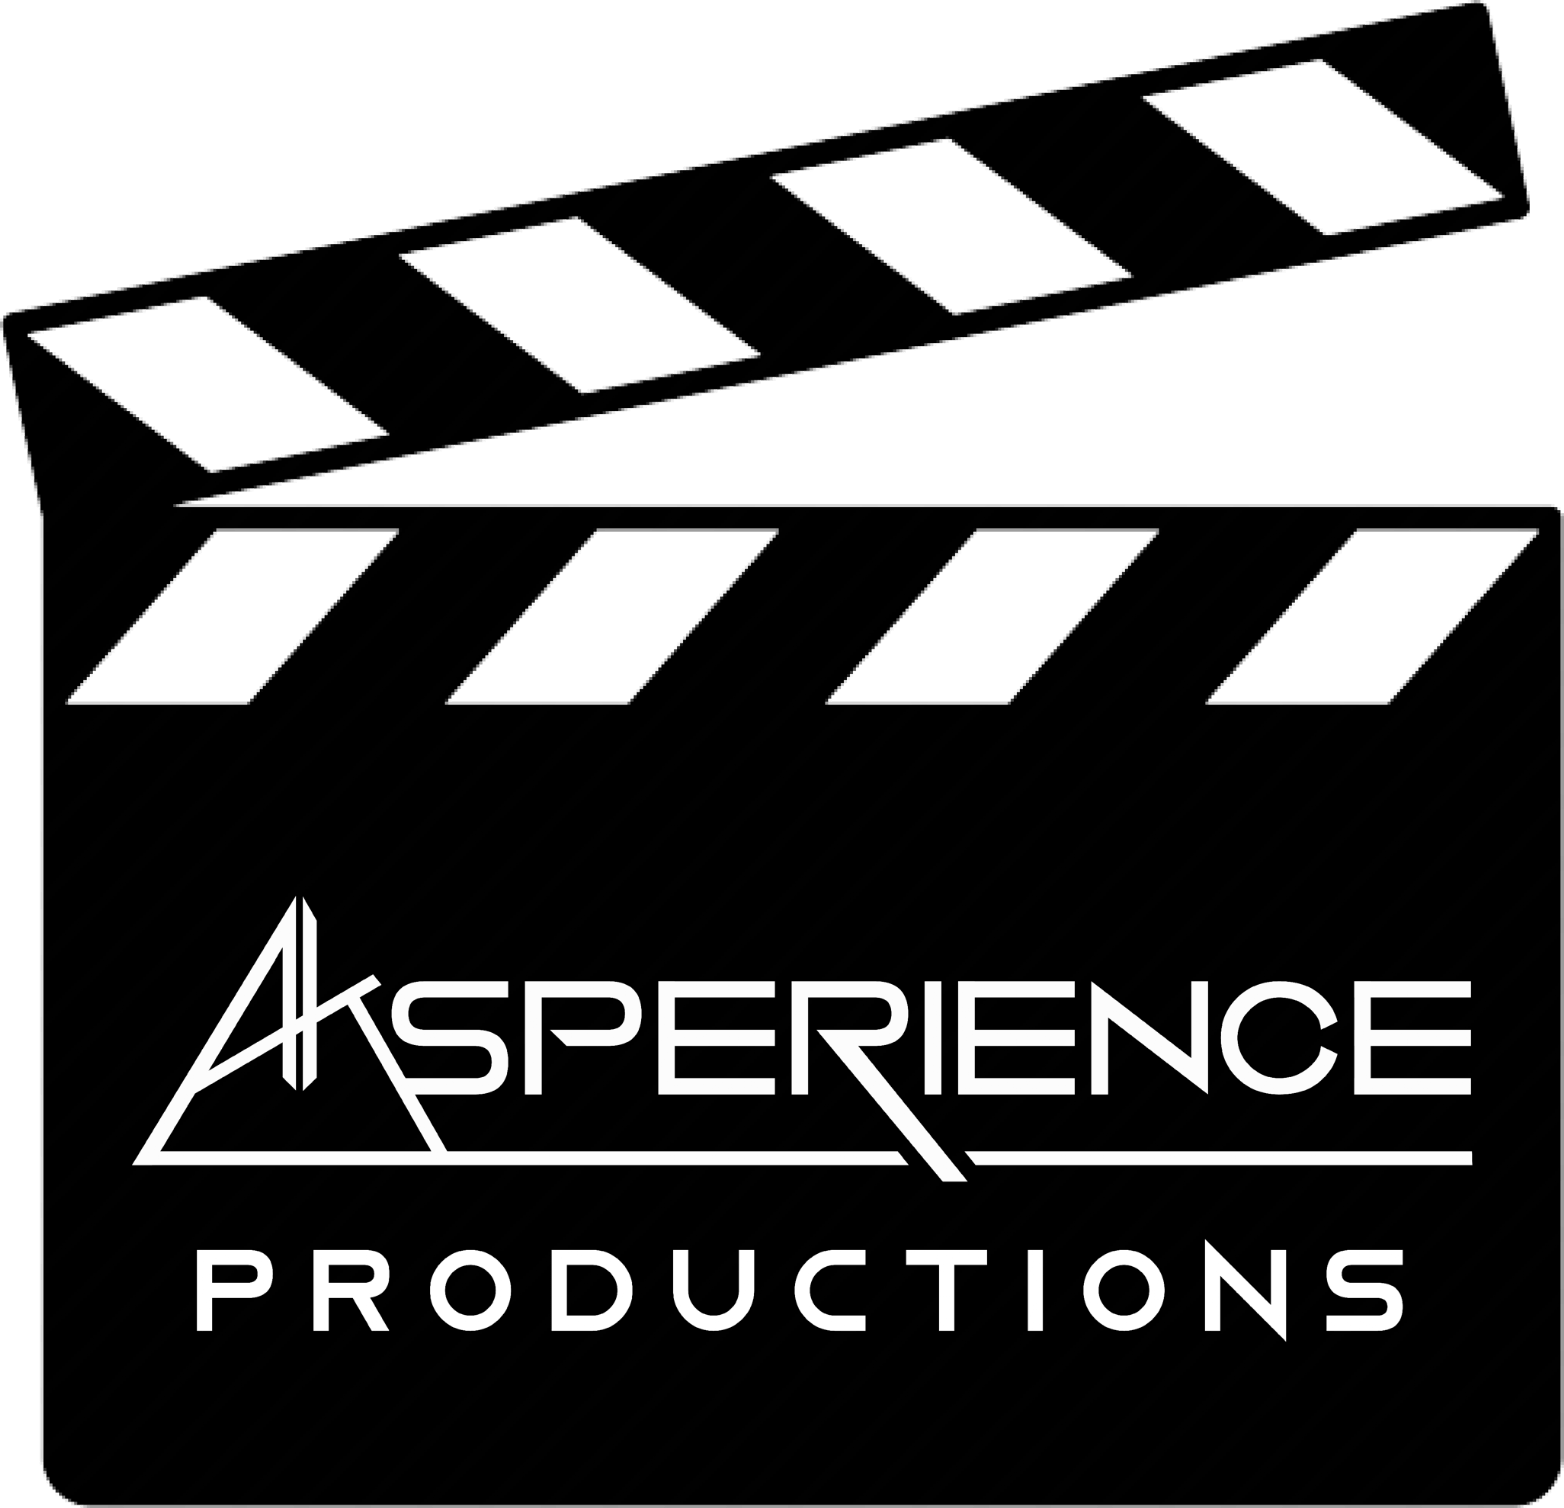 Aksperience Productions